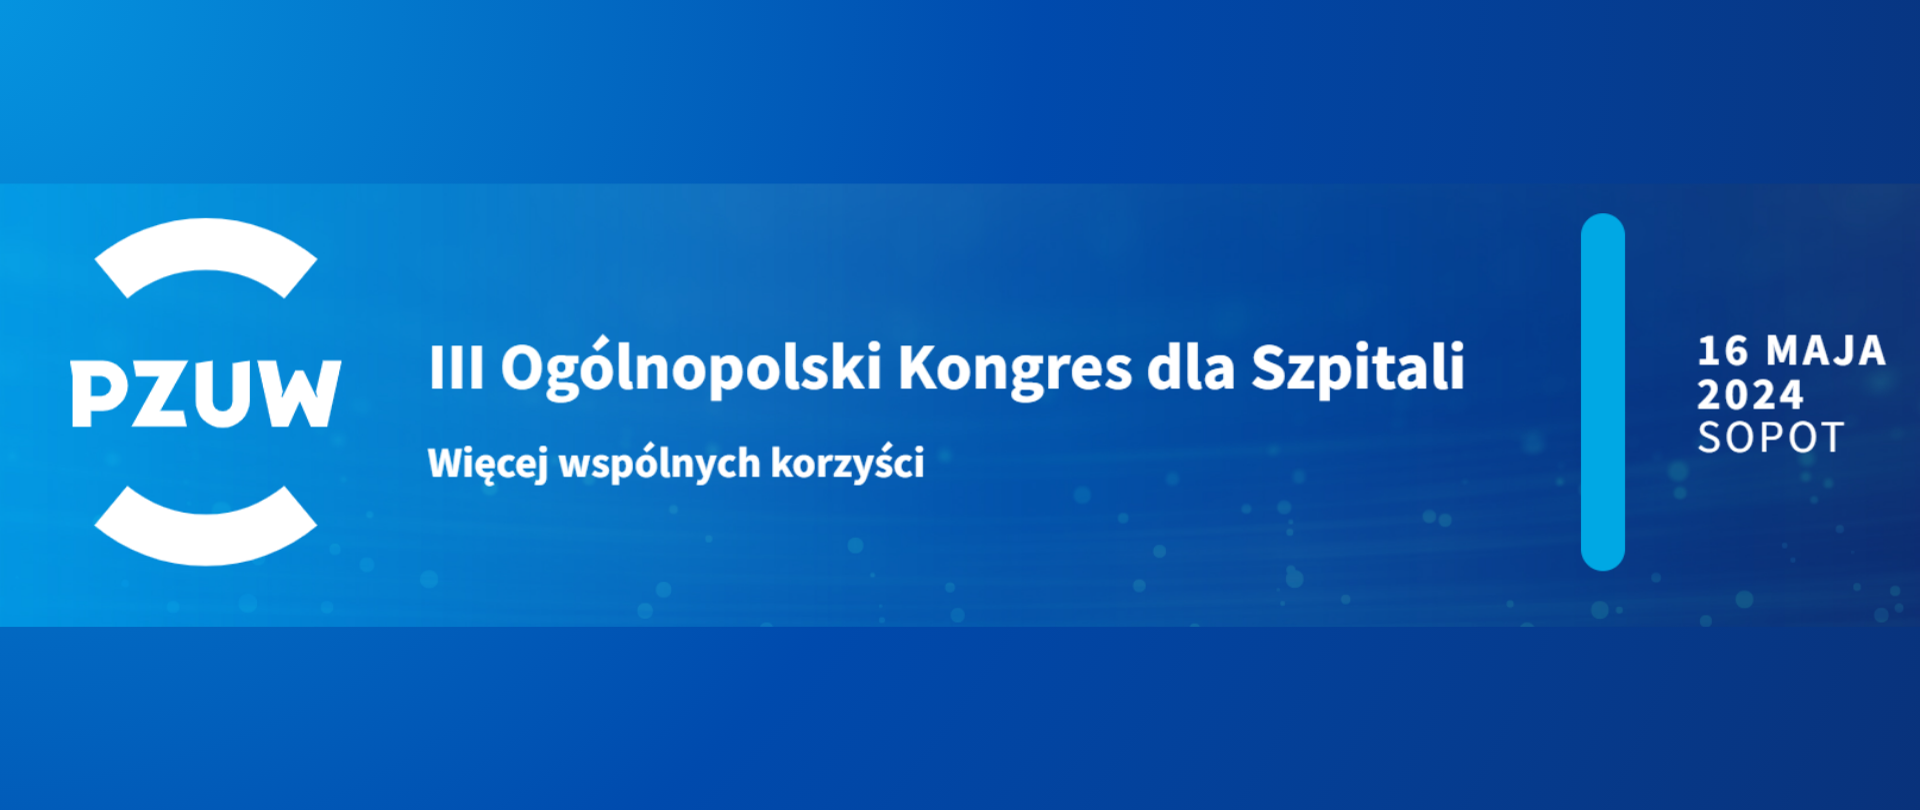 Baner III Ogólnopolski Kongres dla szpitali 16 maja 2024 Sopot